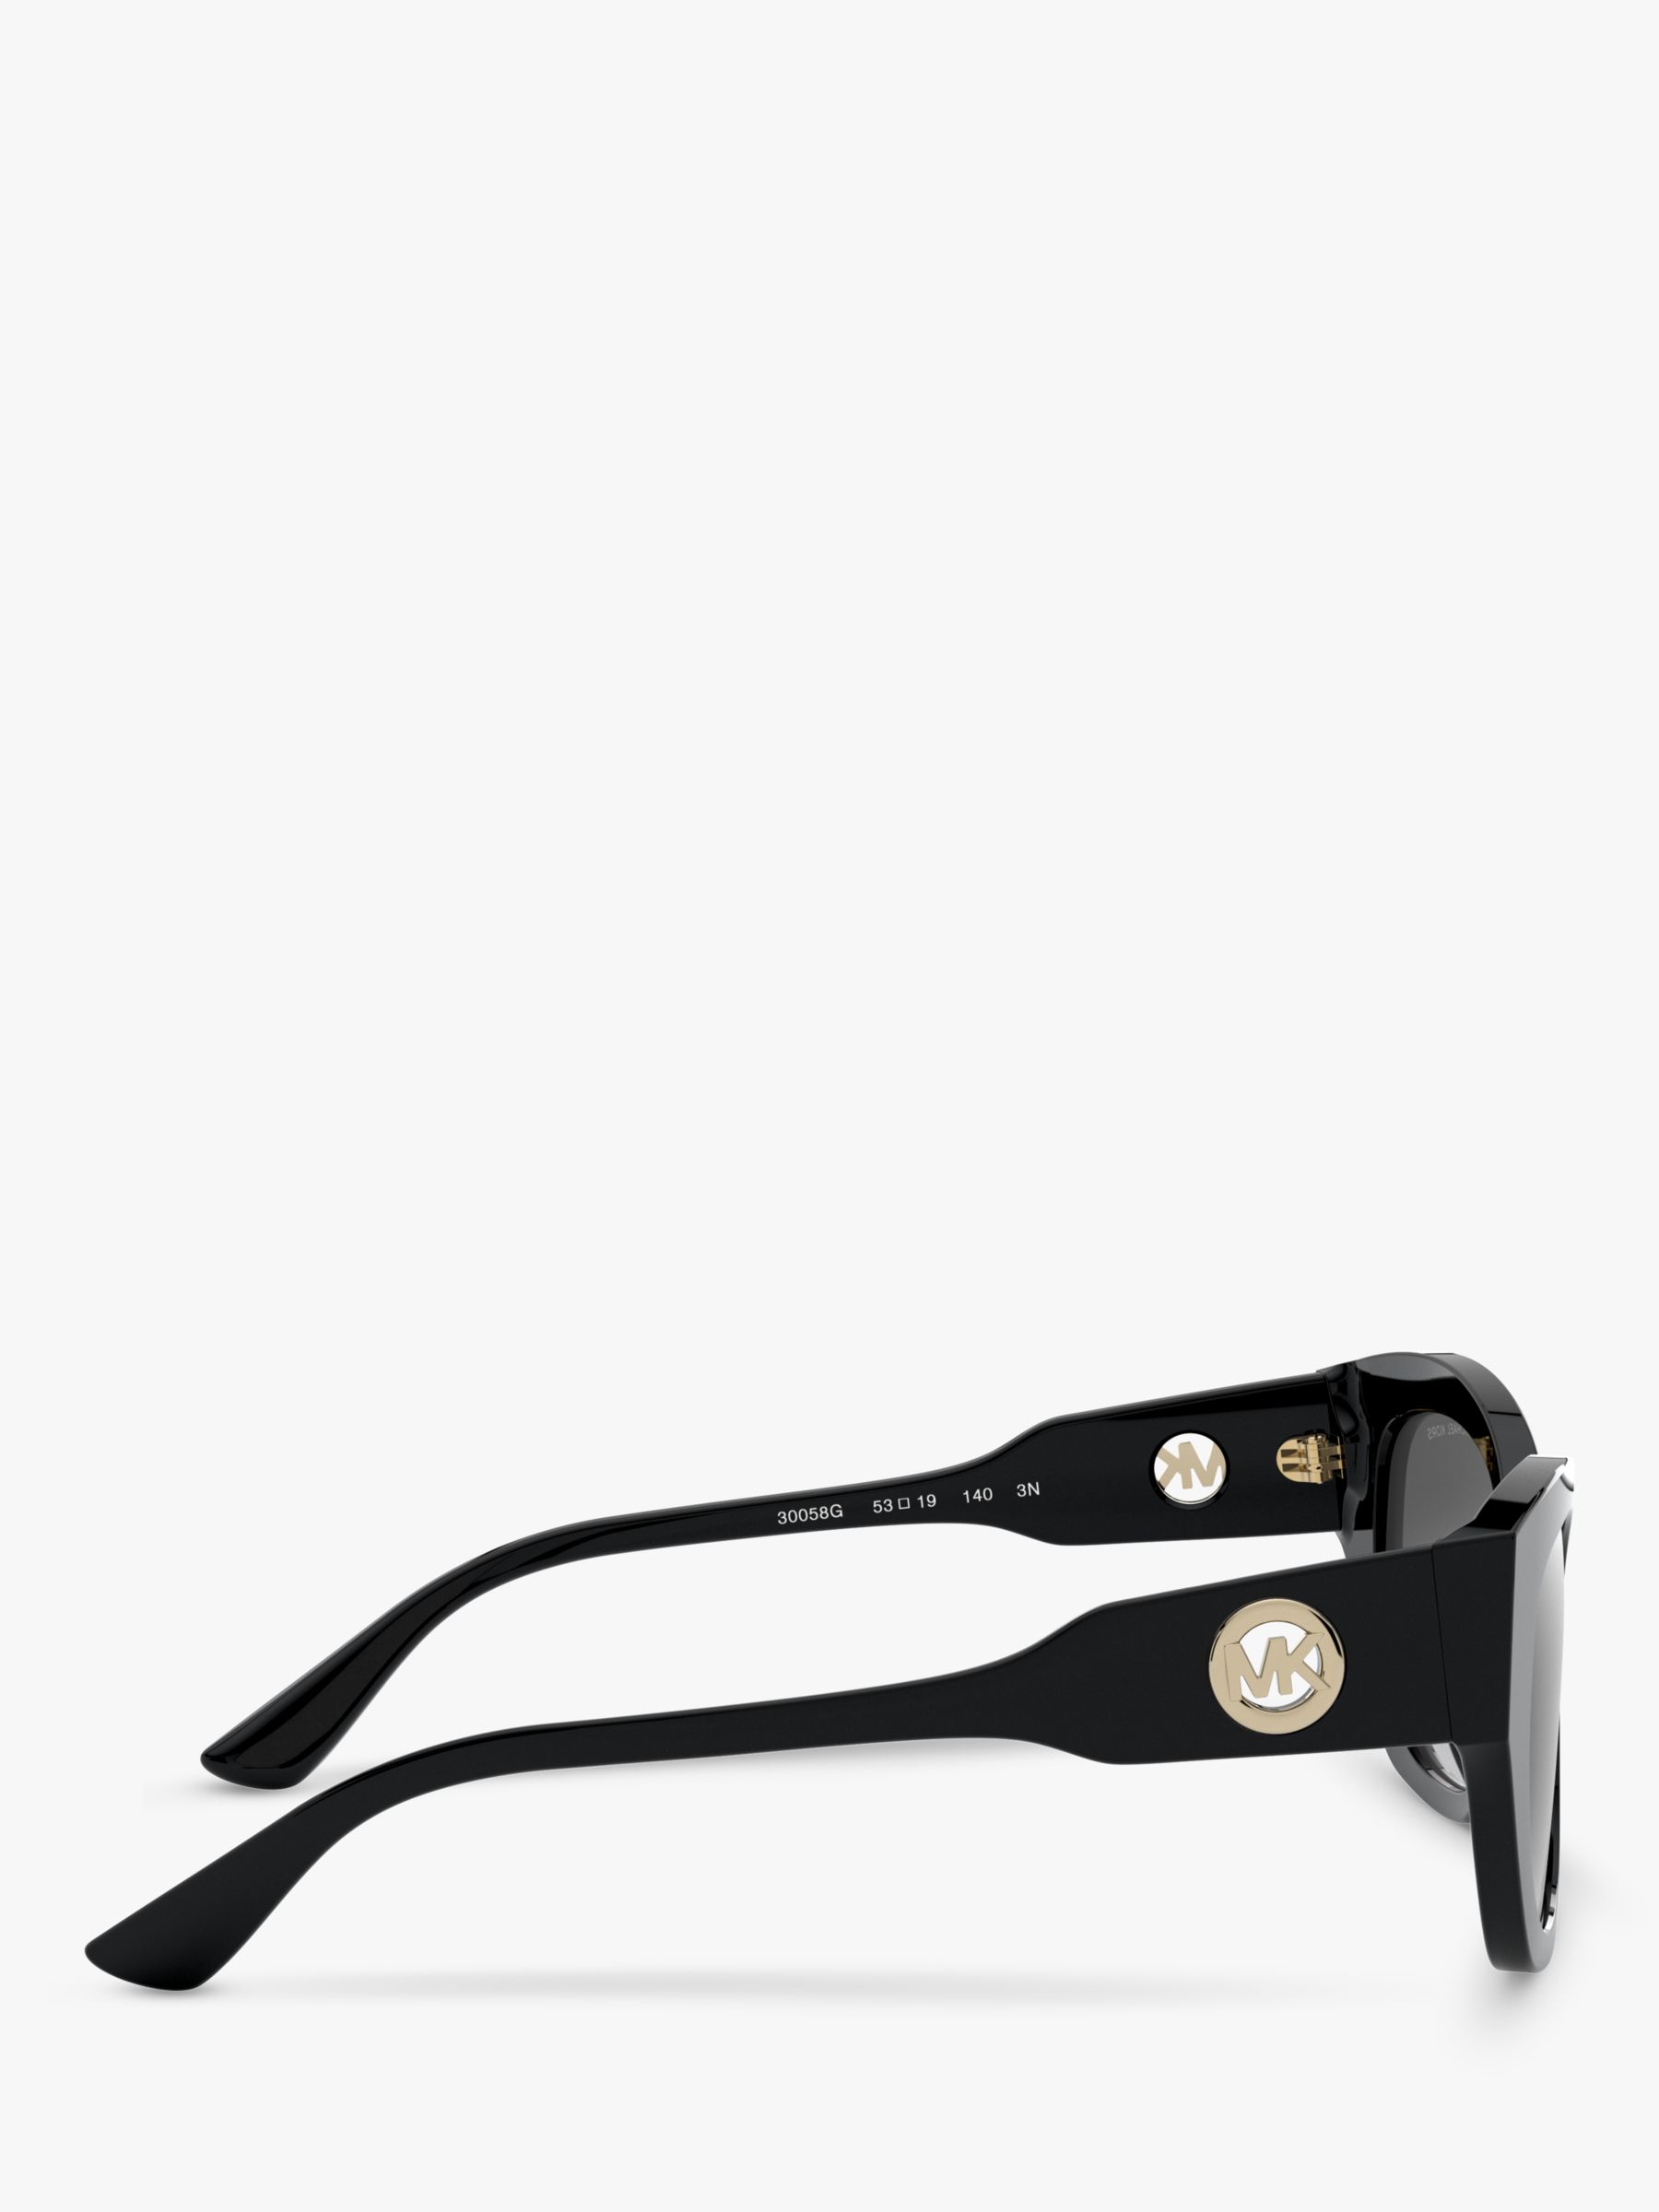 Michael Kors MK2119 Women's Palermo Square Sunglasses, Black/Grey ...